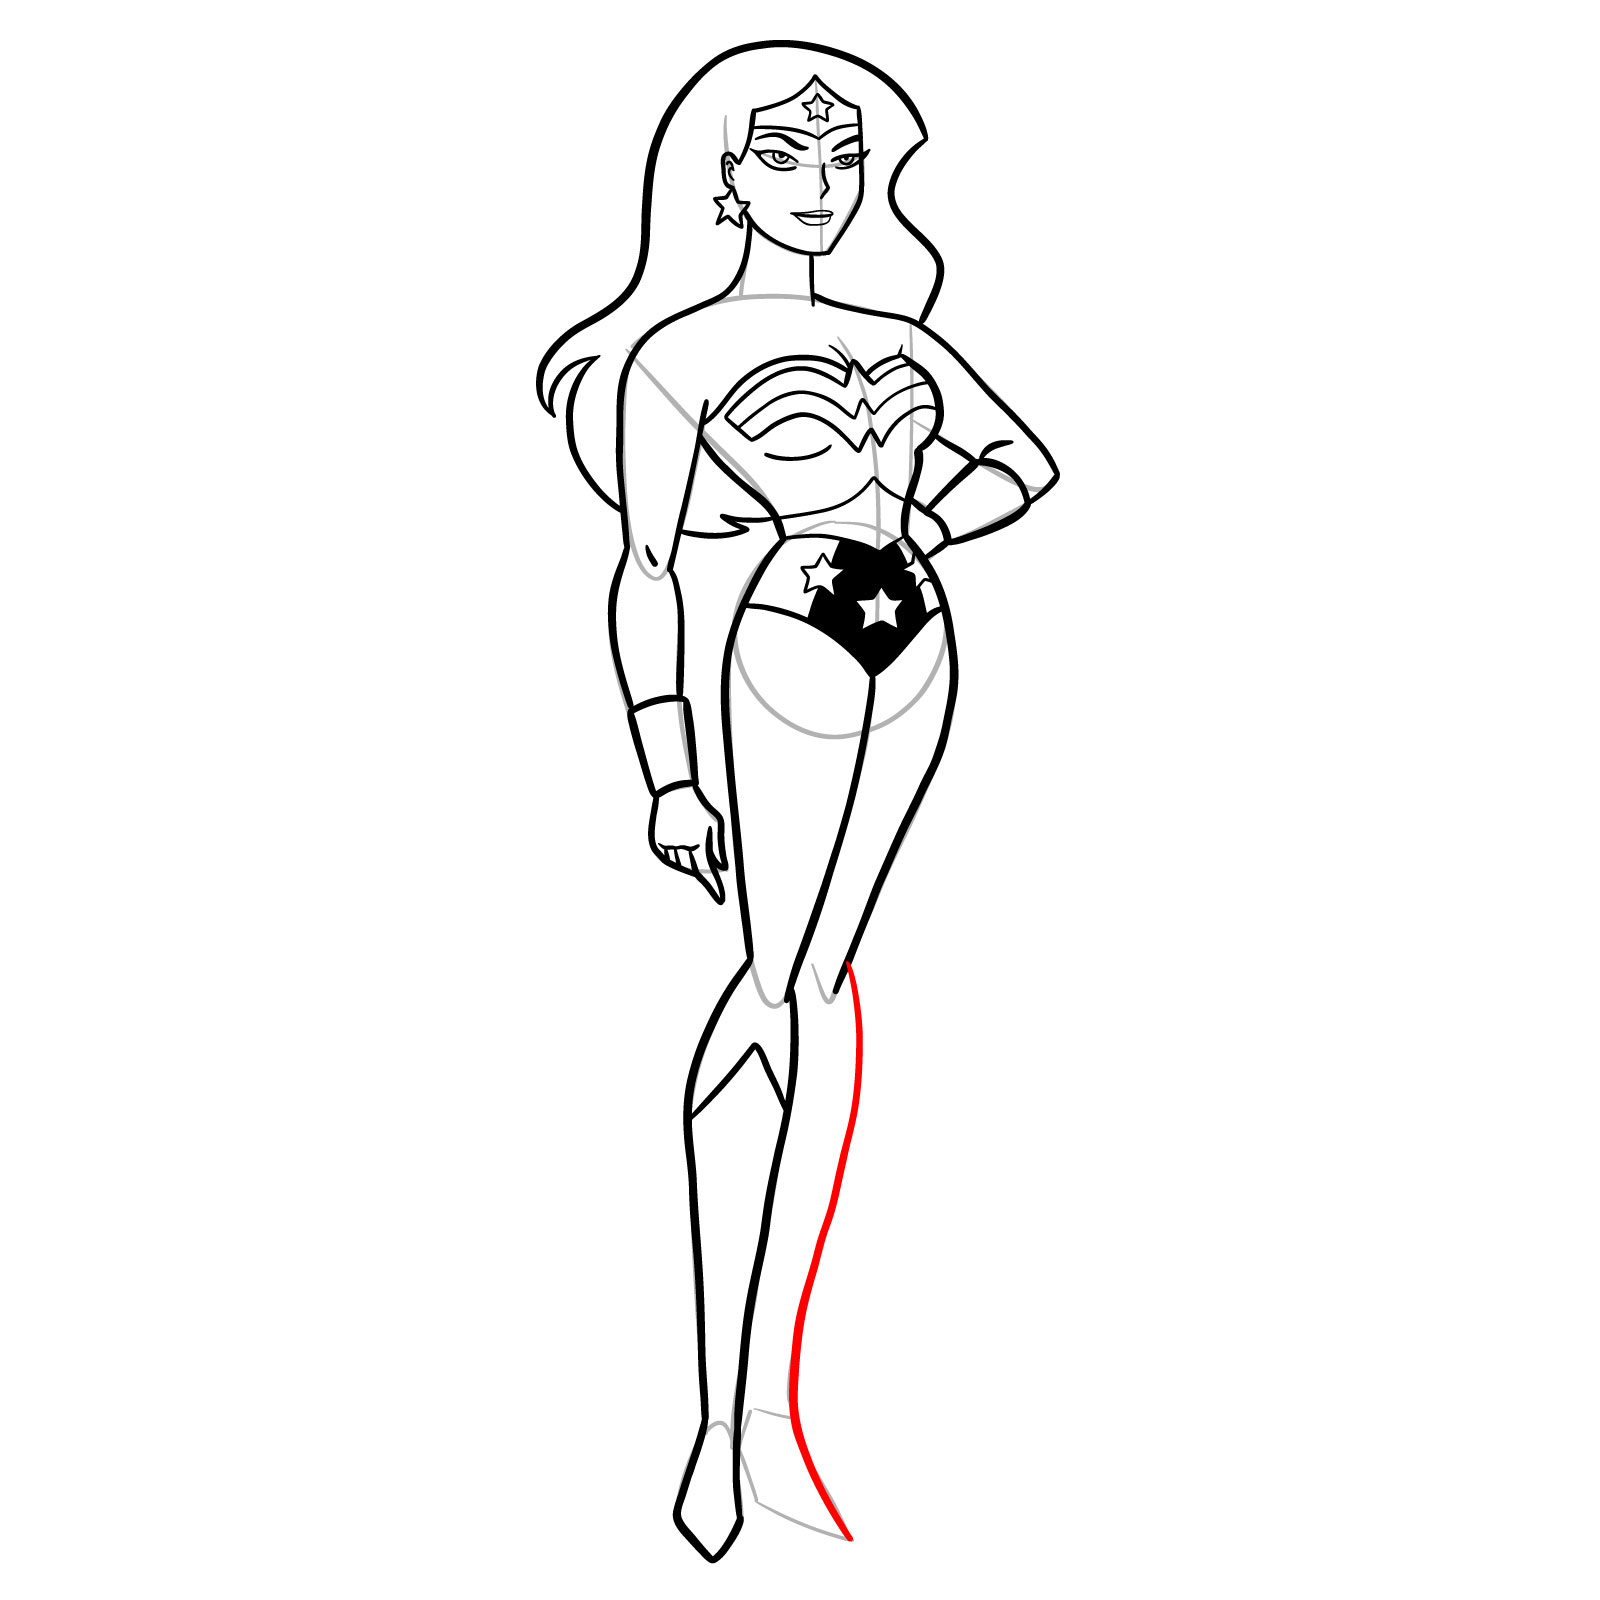 How to draw Wonder Woman cartoon style - step 29